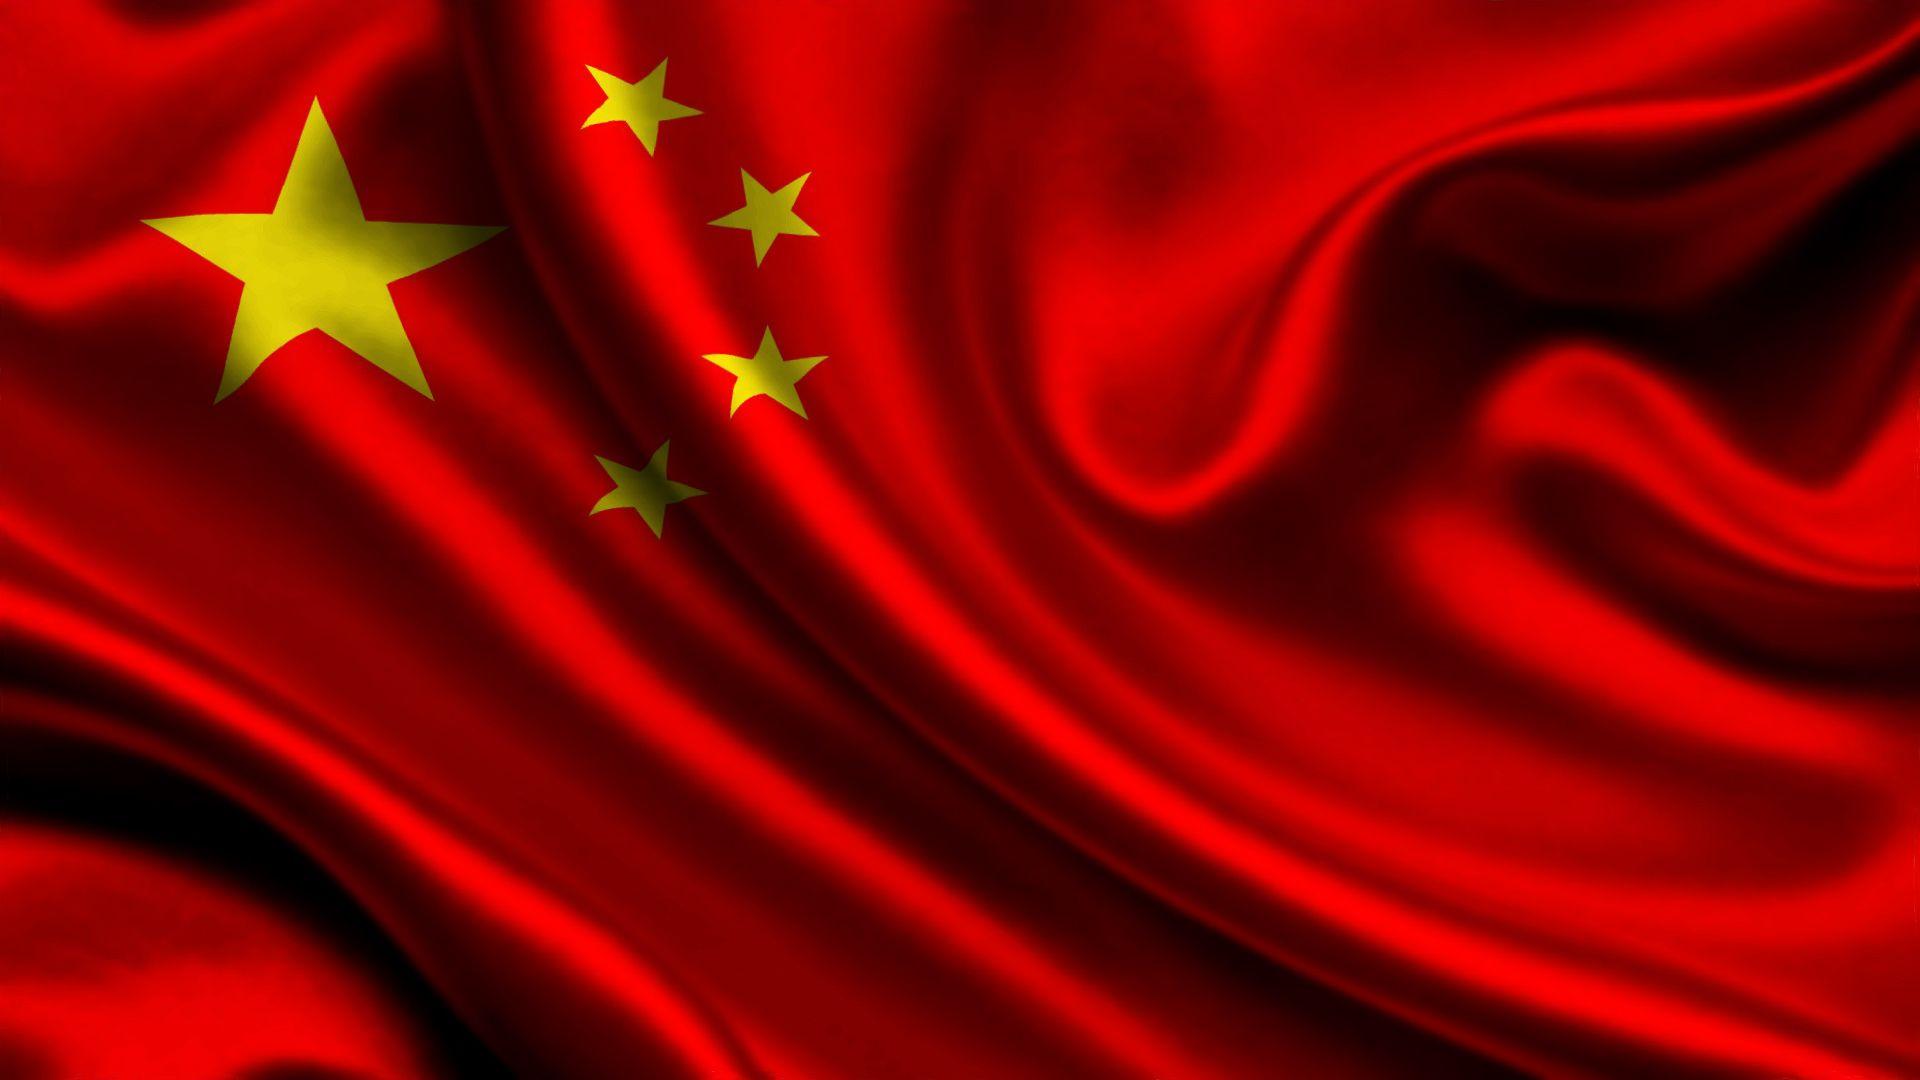 4168x2728px China Flag (6839.91 KB).03.2015